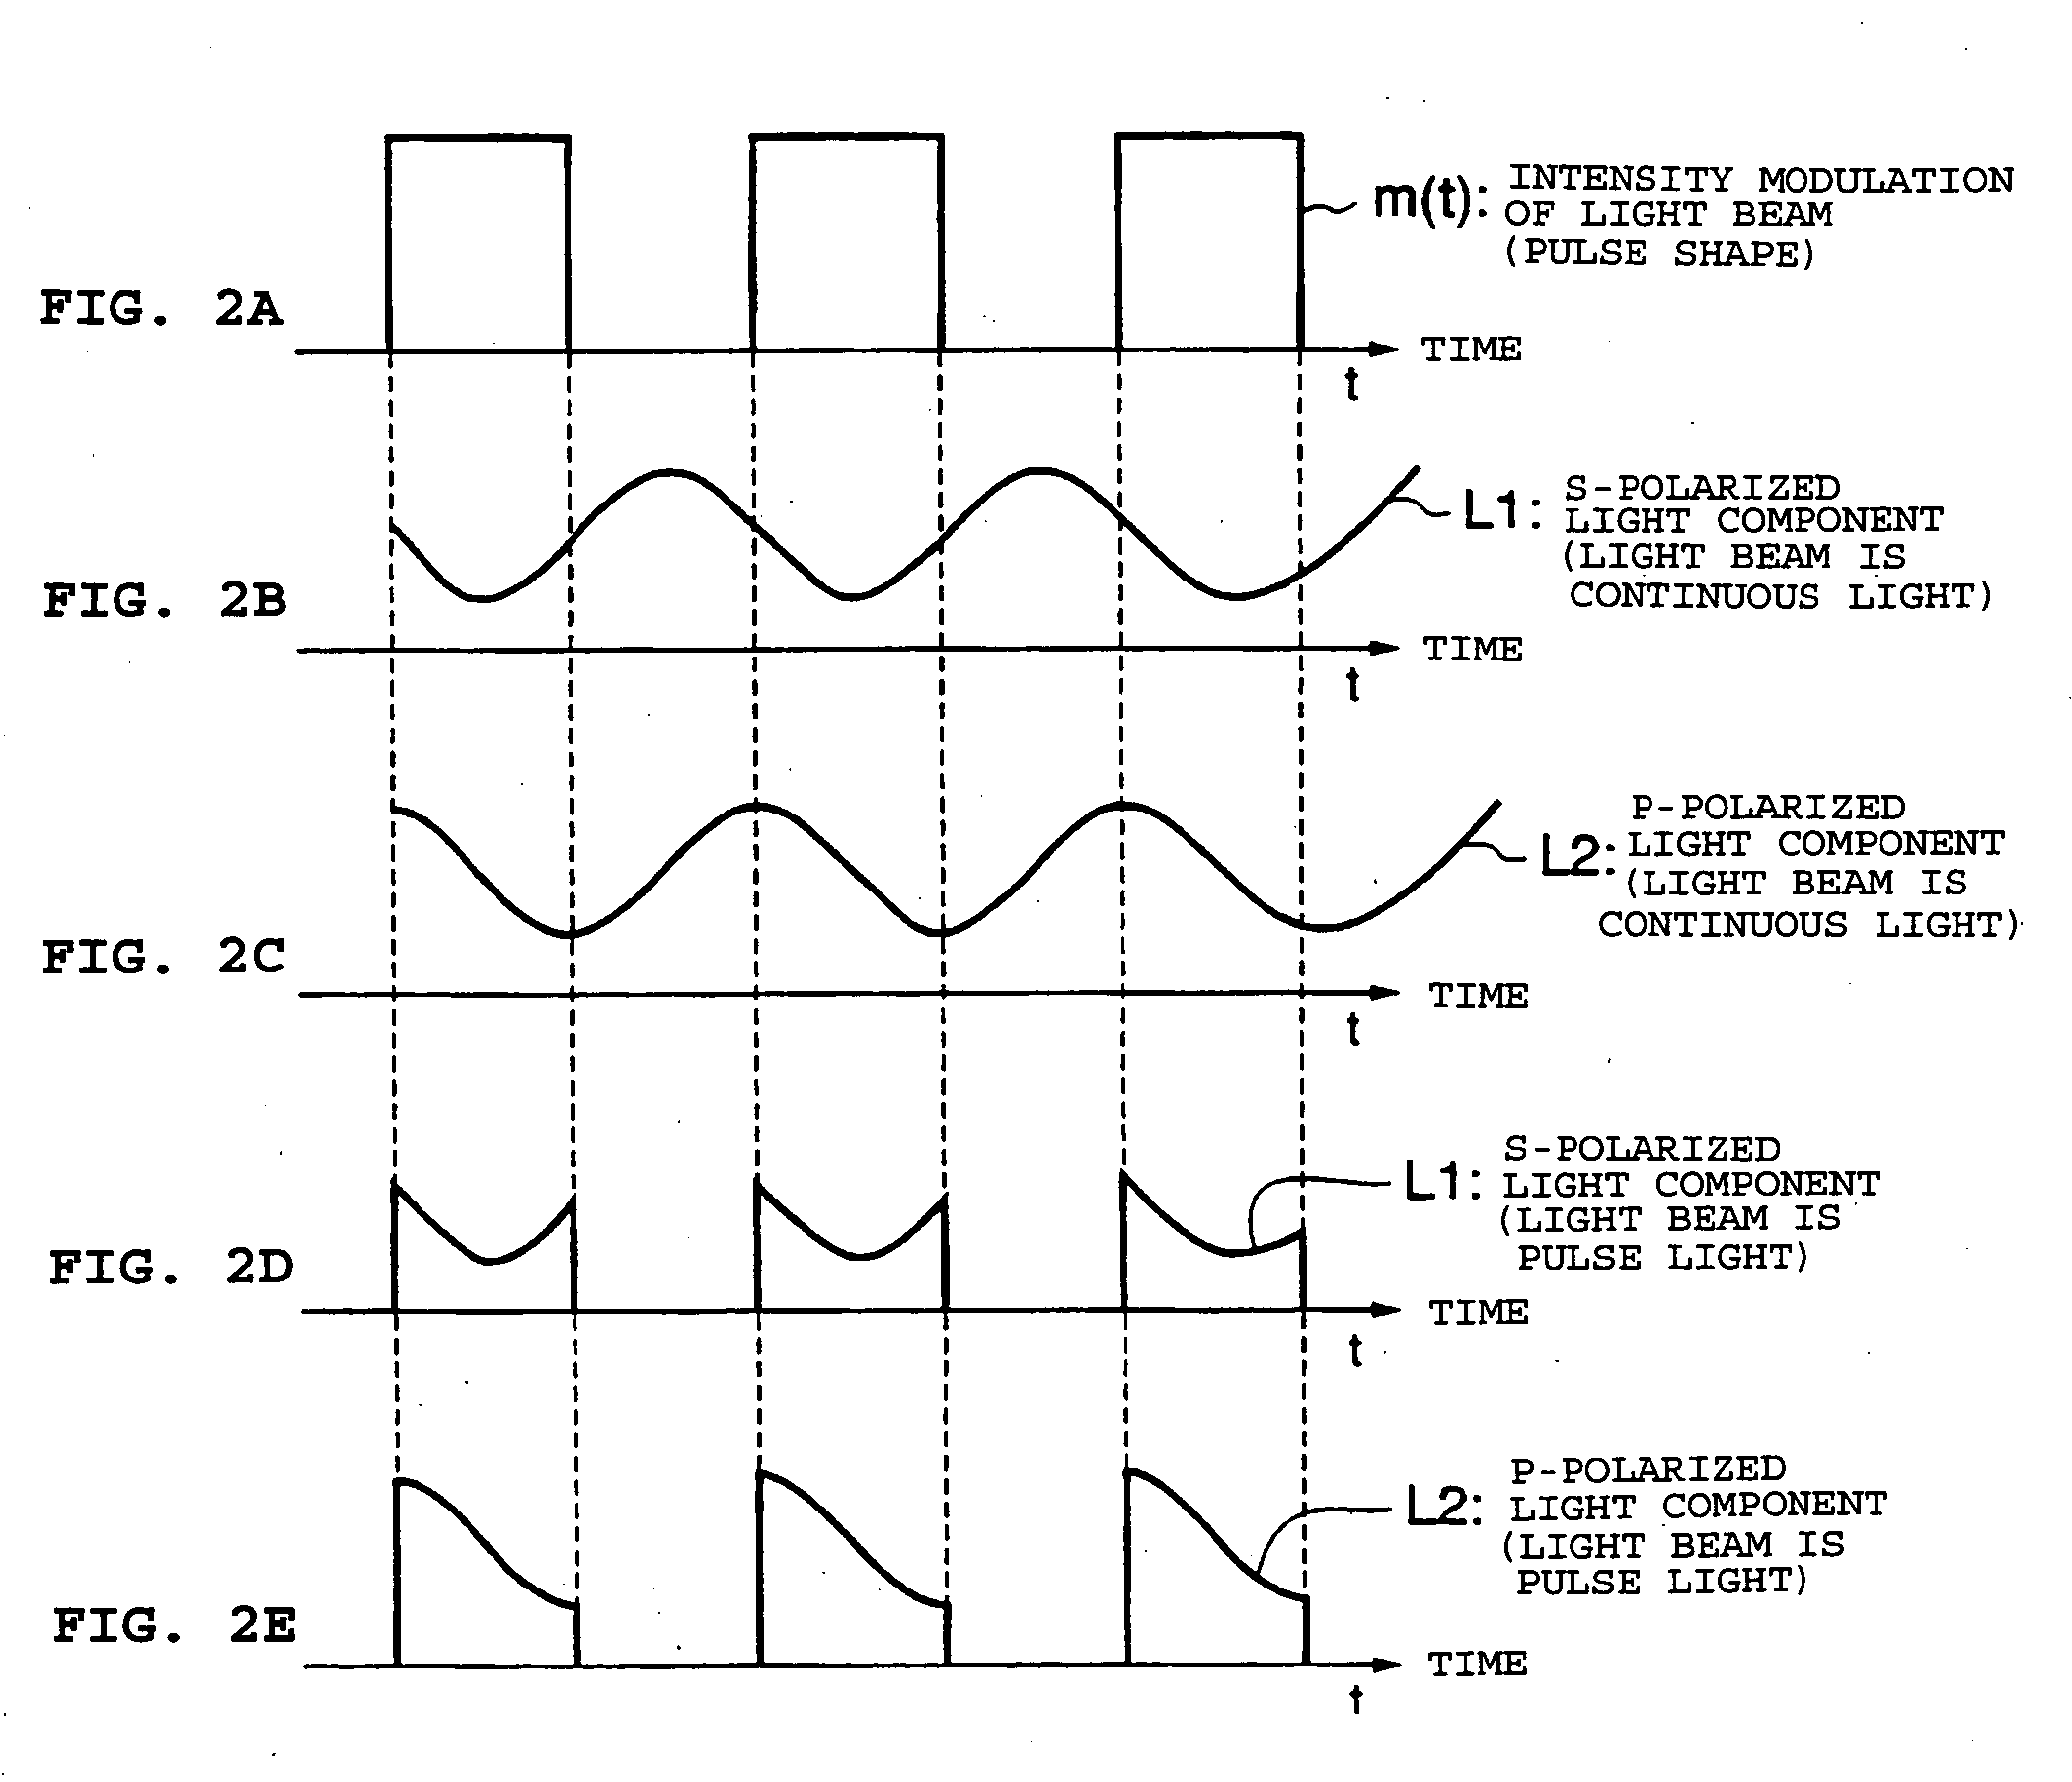 Optical image measuring apparatus